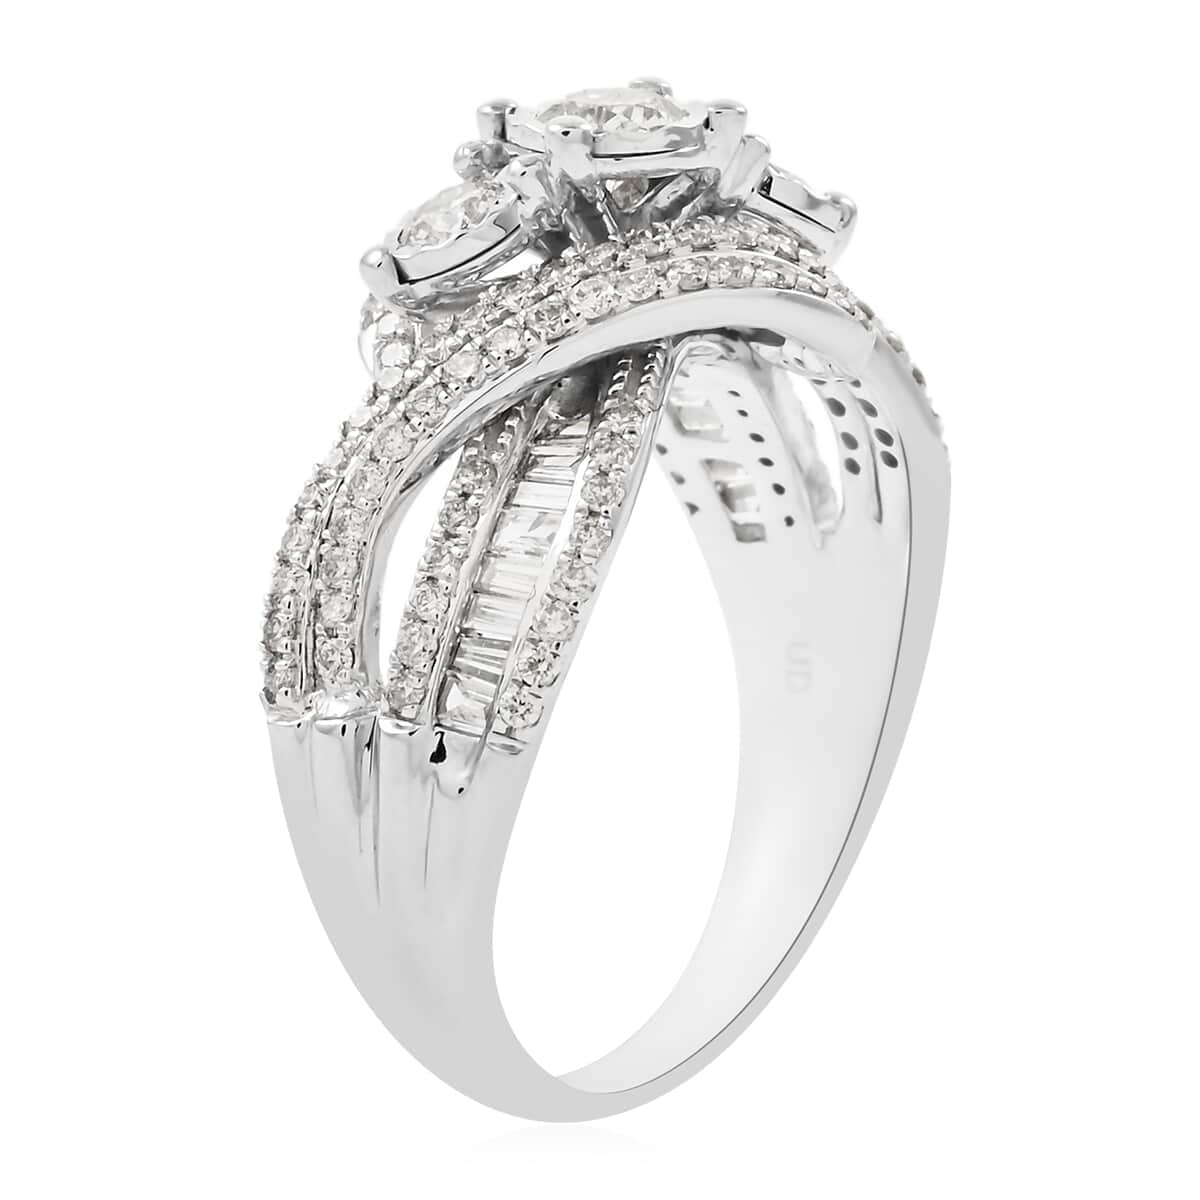 10K White Gold G-H SI Diamond Ring (Size 7.0) 4.70 Grams 1.00 ctw image number 3